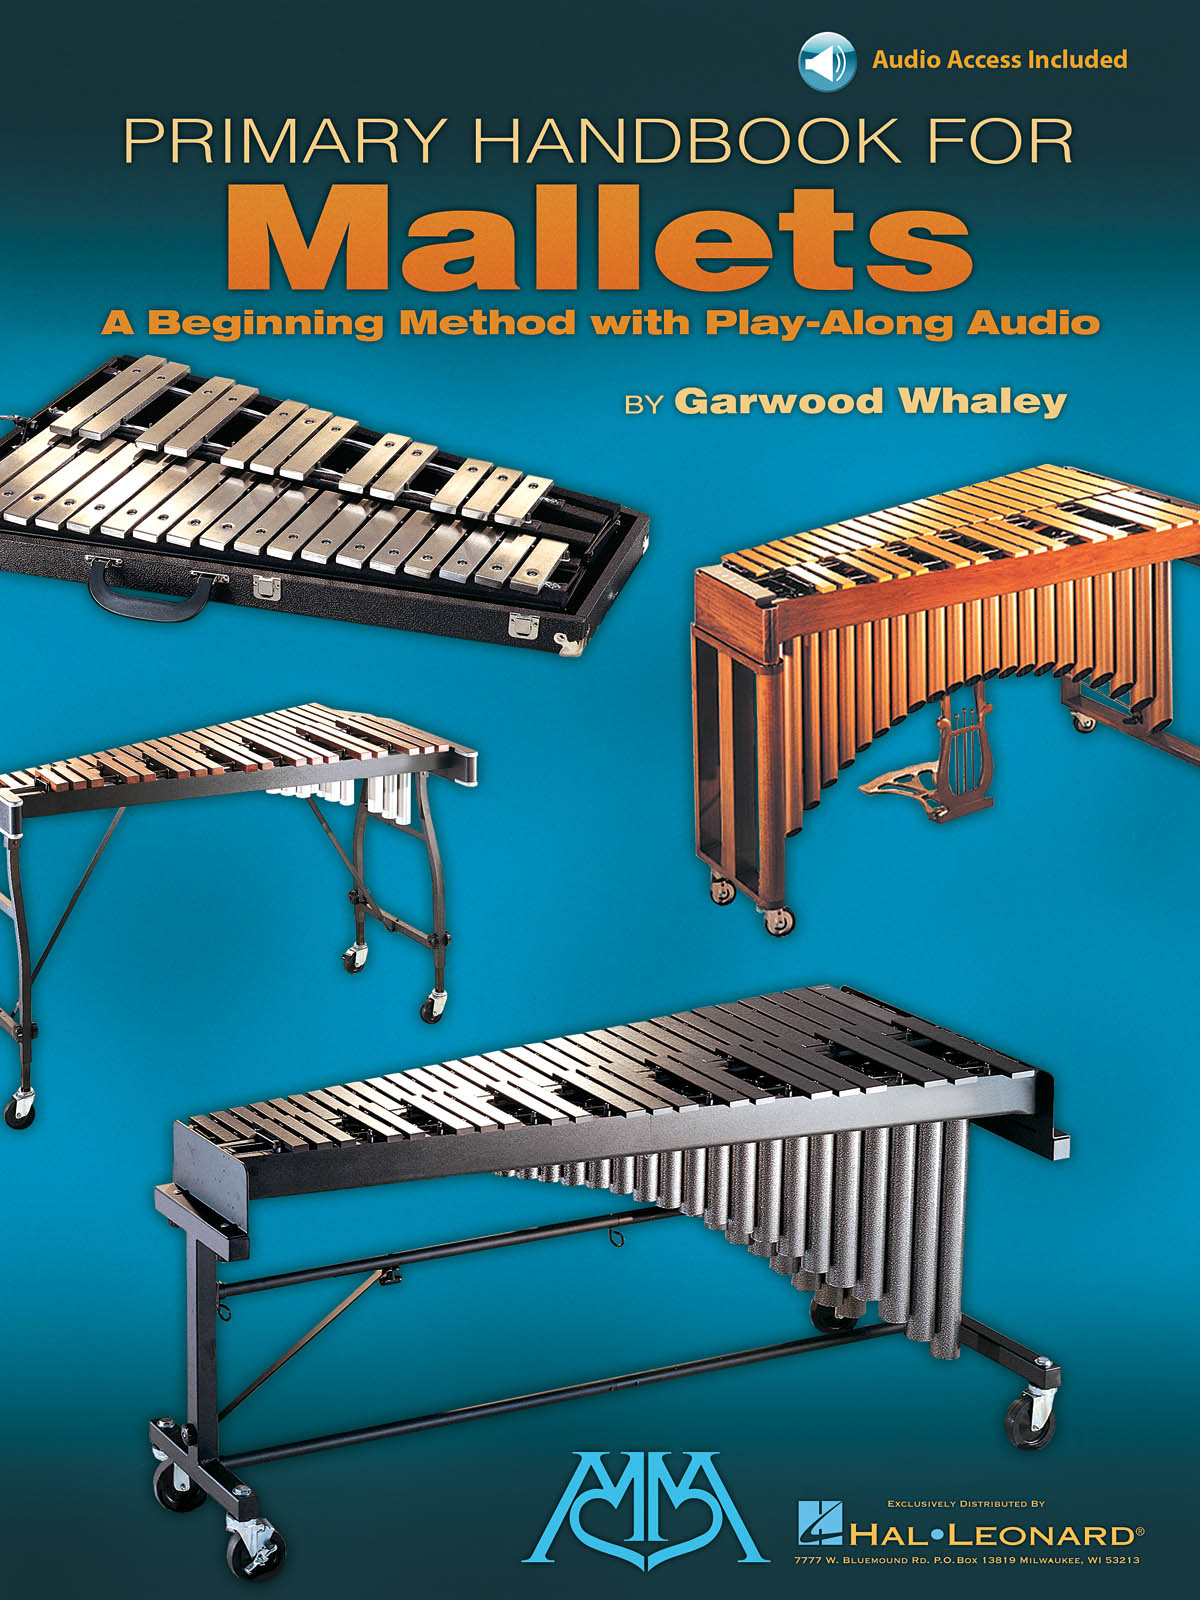 Primary Handbook for Mallets - učebnice pro xylofon, marimbu, vibrafon a zvonky